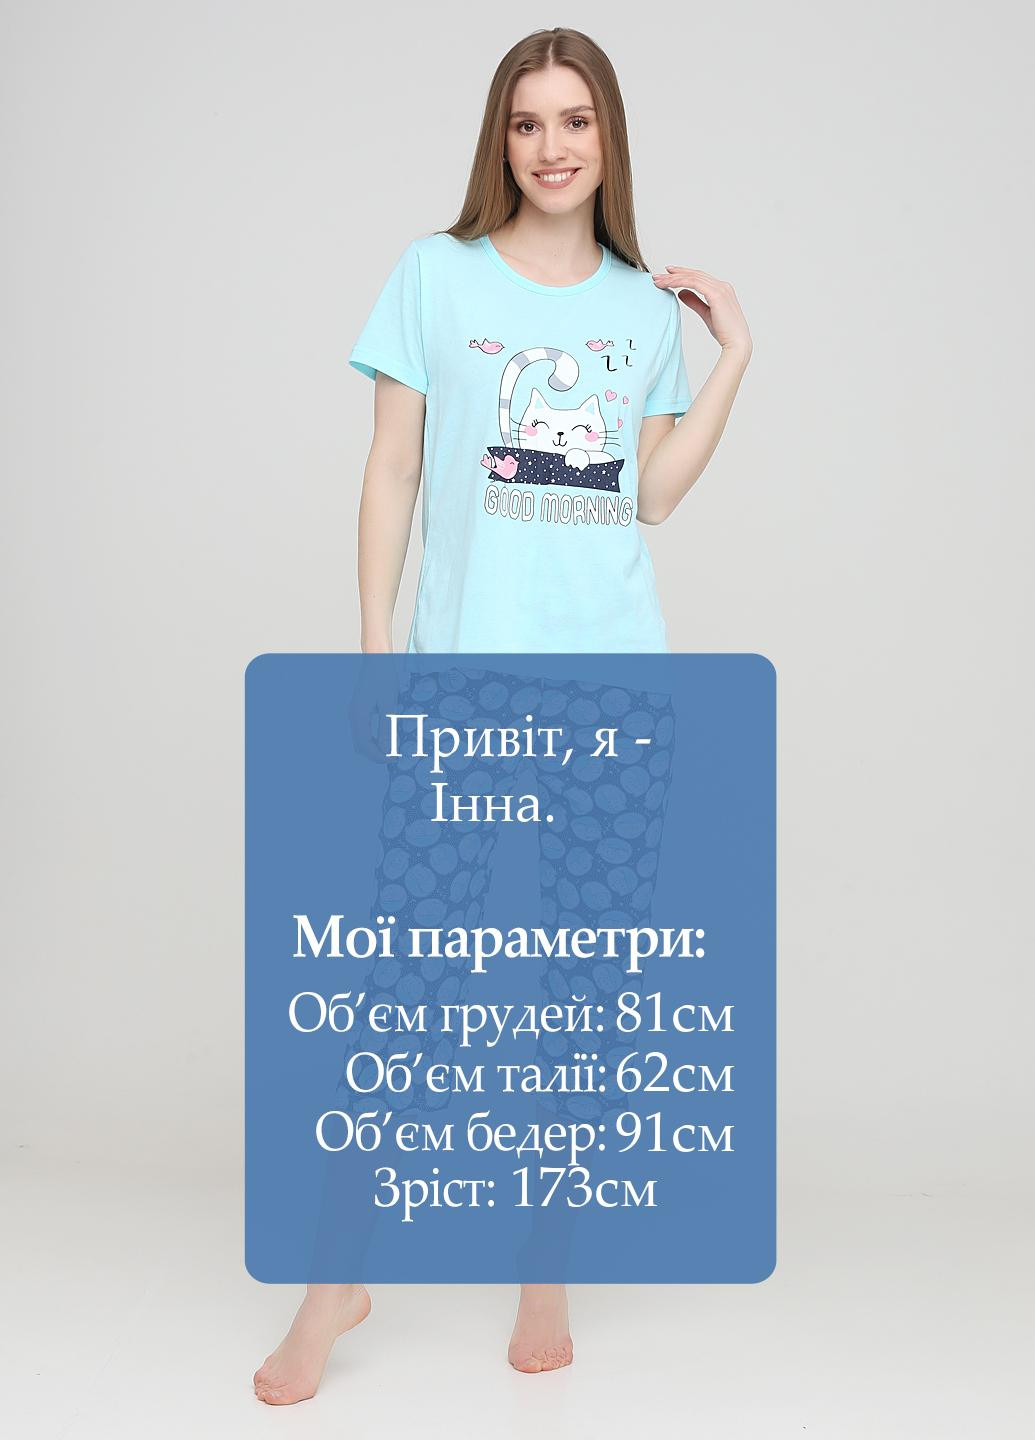 Голубая всесезон пижама (футболка, бриджи) футболка + бриджи Marilynmod